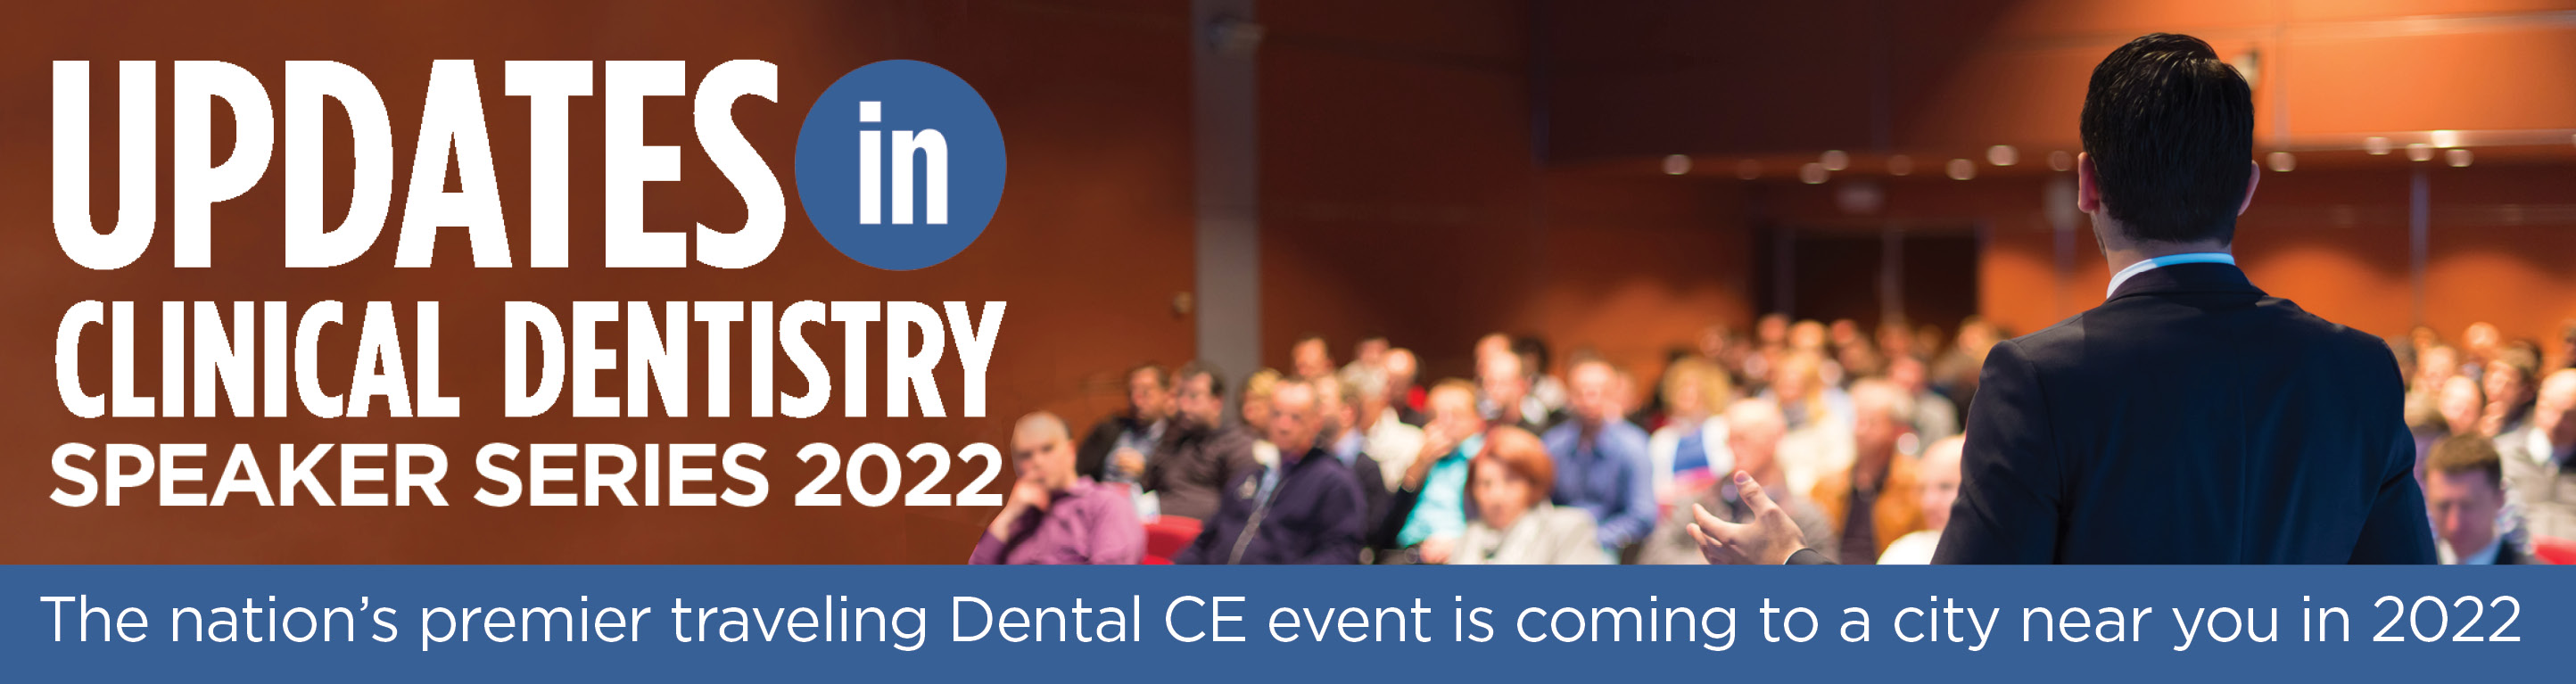 Updates in Clinical Dentistry Speaker Series 2022